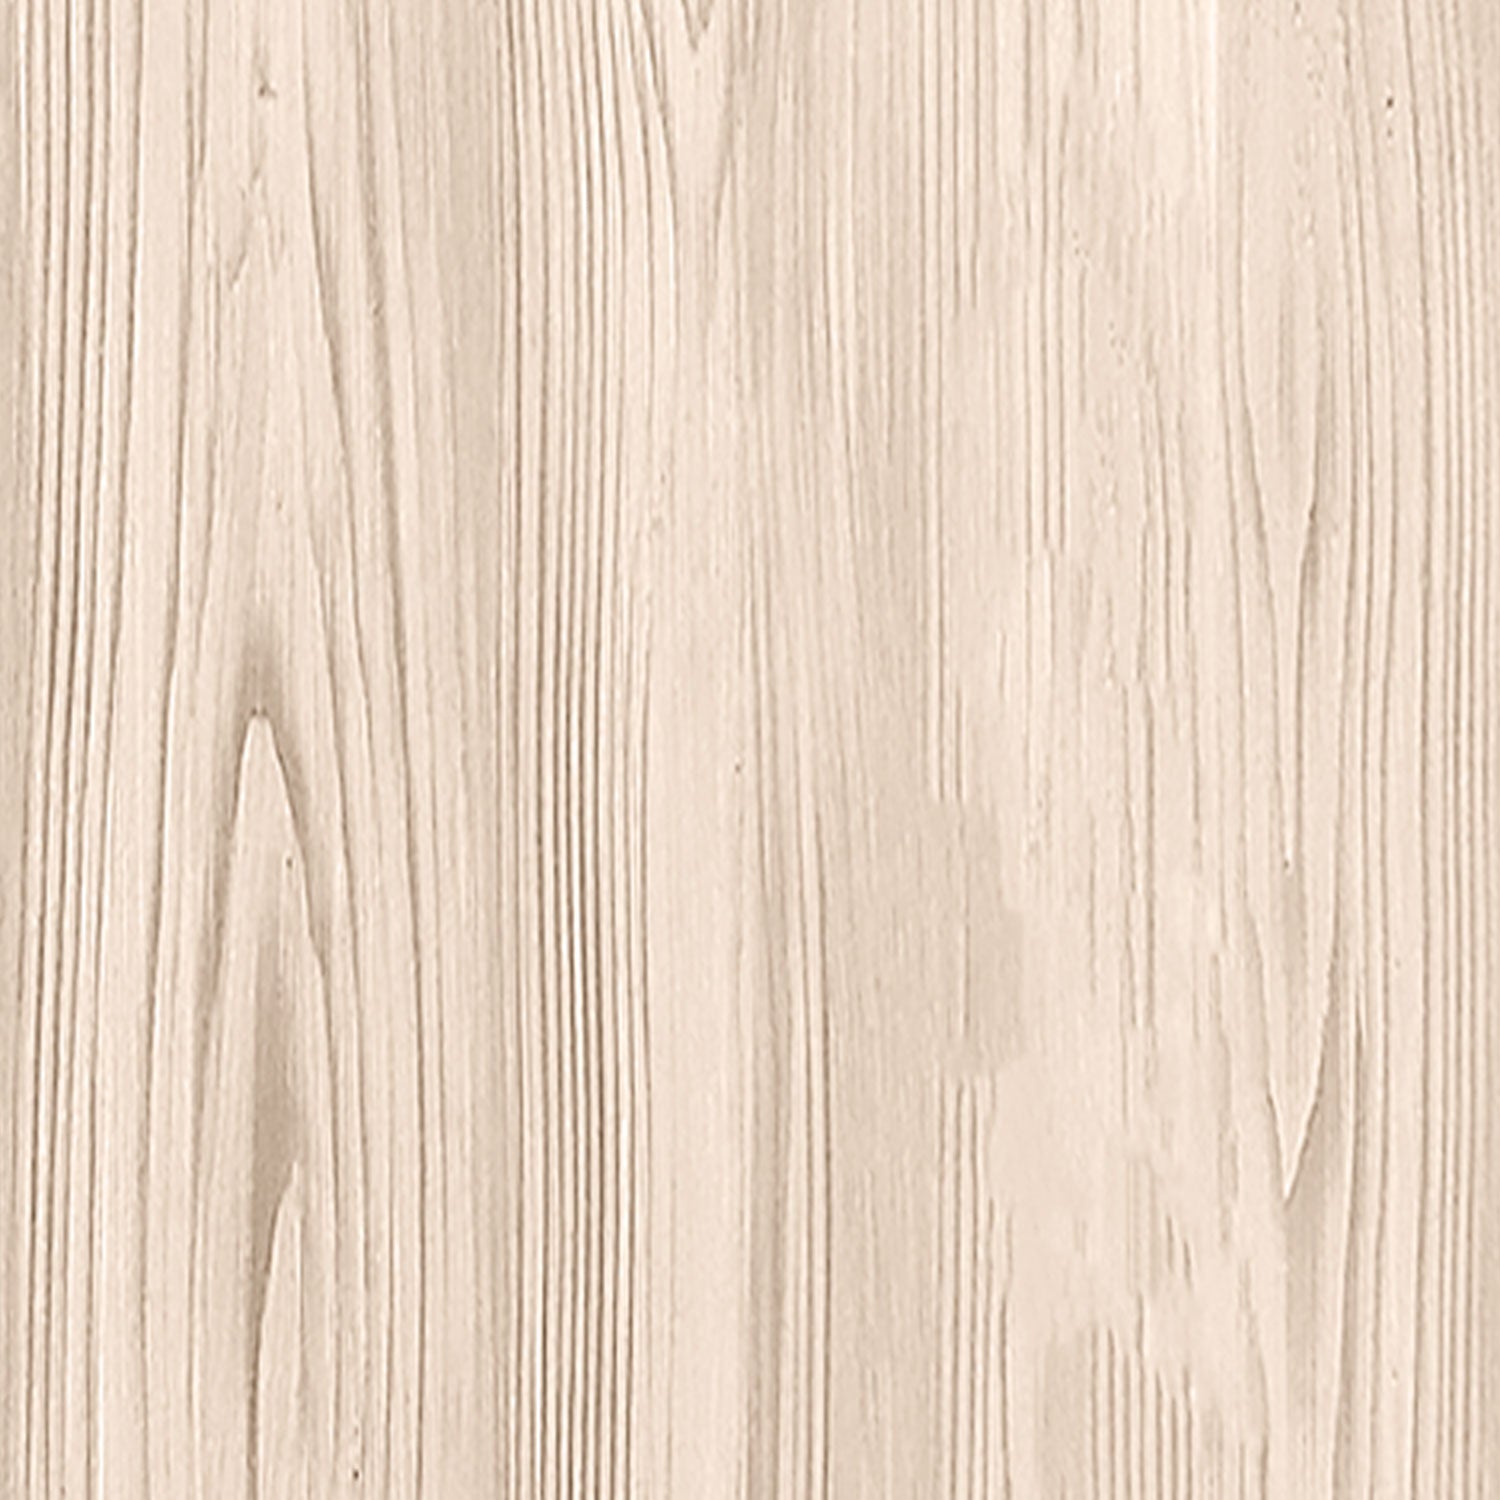 Multi-purpose Wood'n Kit (Med) - White Oak - Interior Top Coat